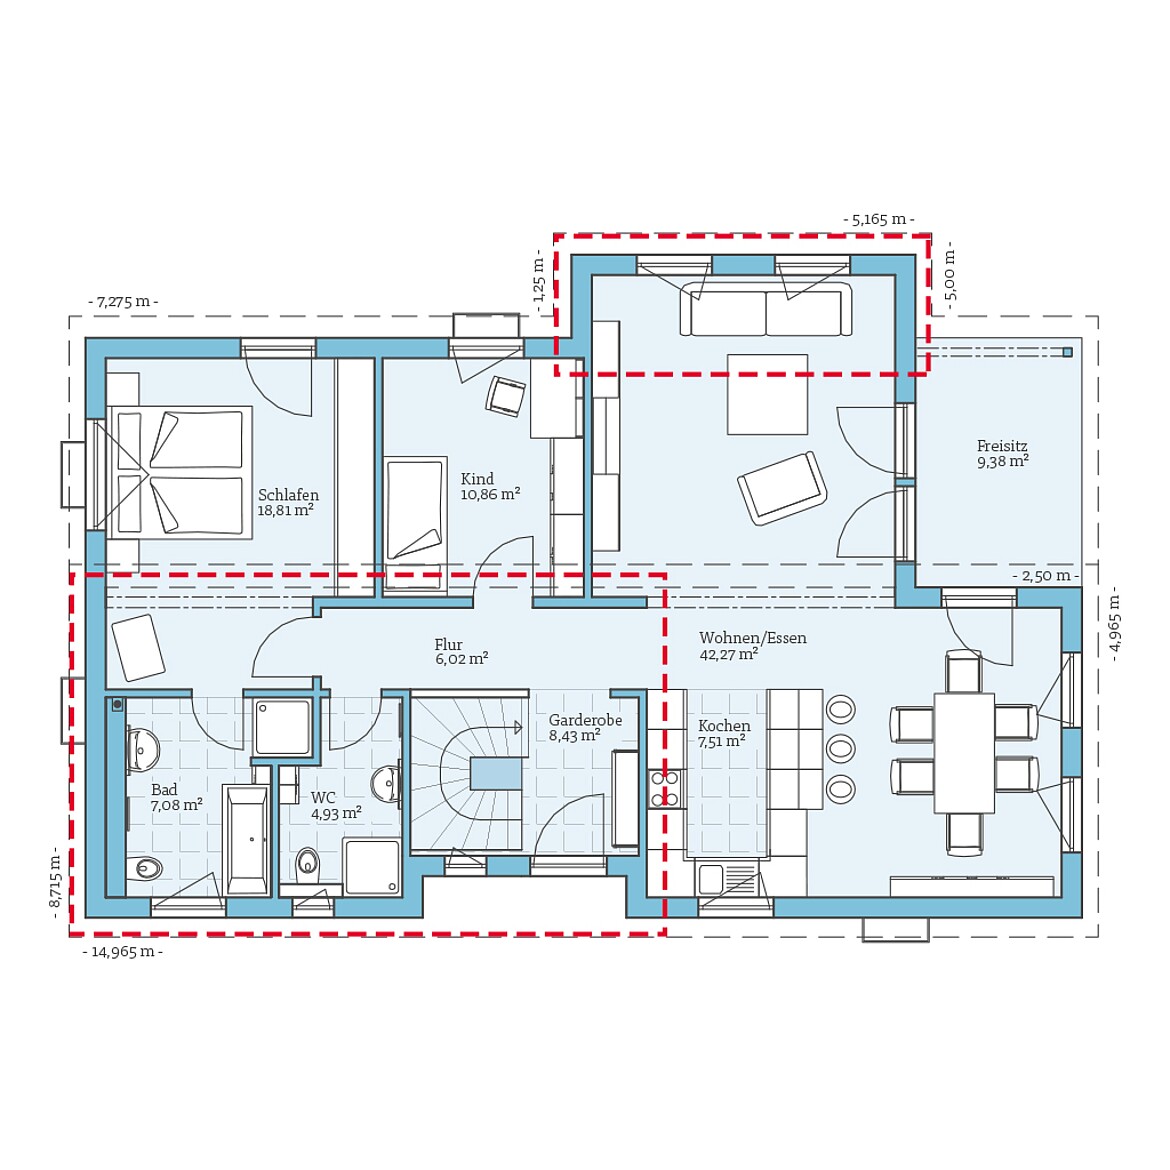 Prefabricated house Bungalow 109: Floor plan option ground floor